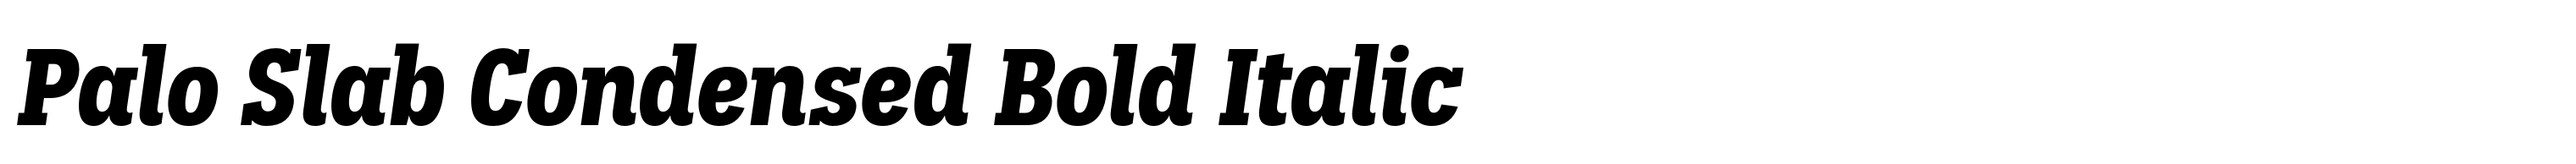 Palo Slab Condensed Bold Italic